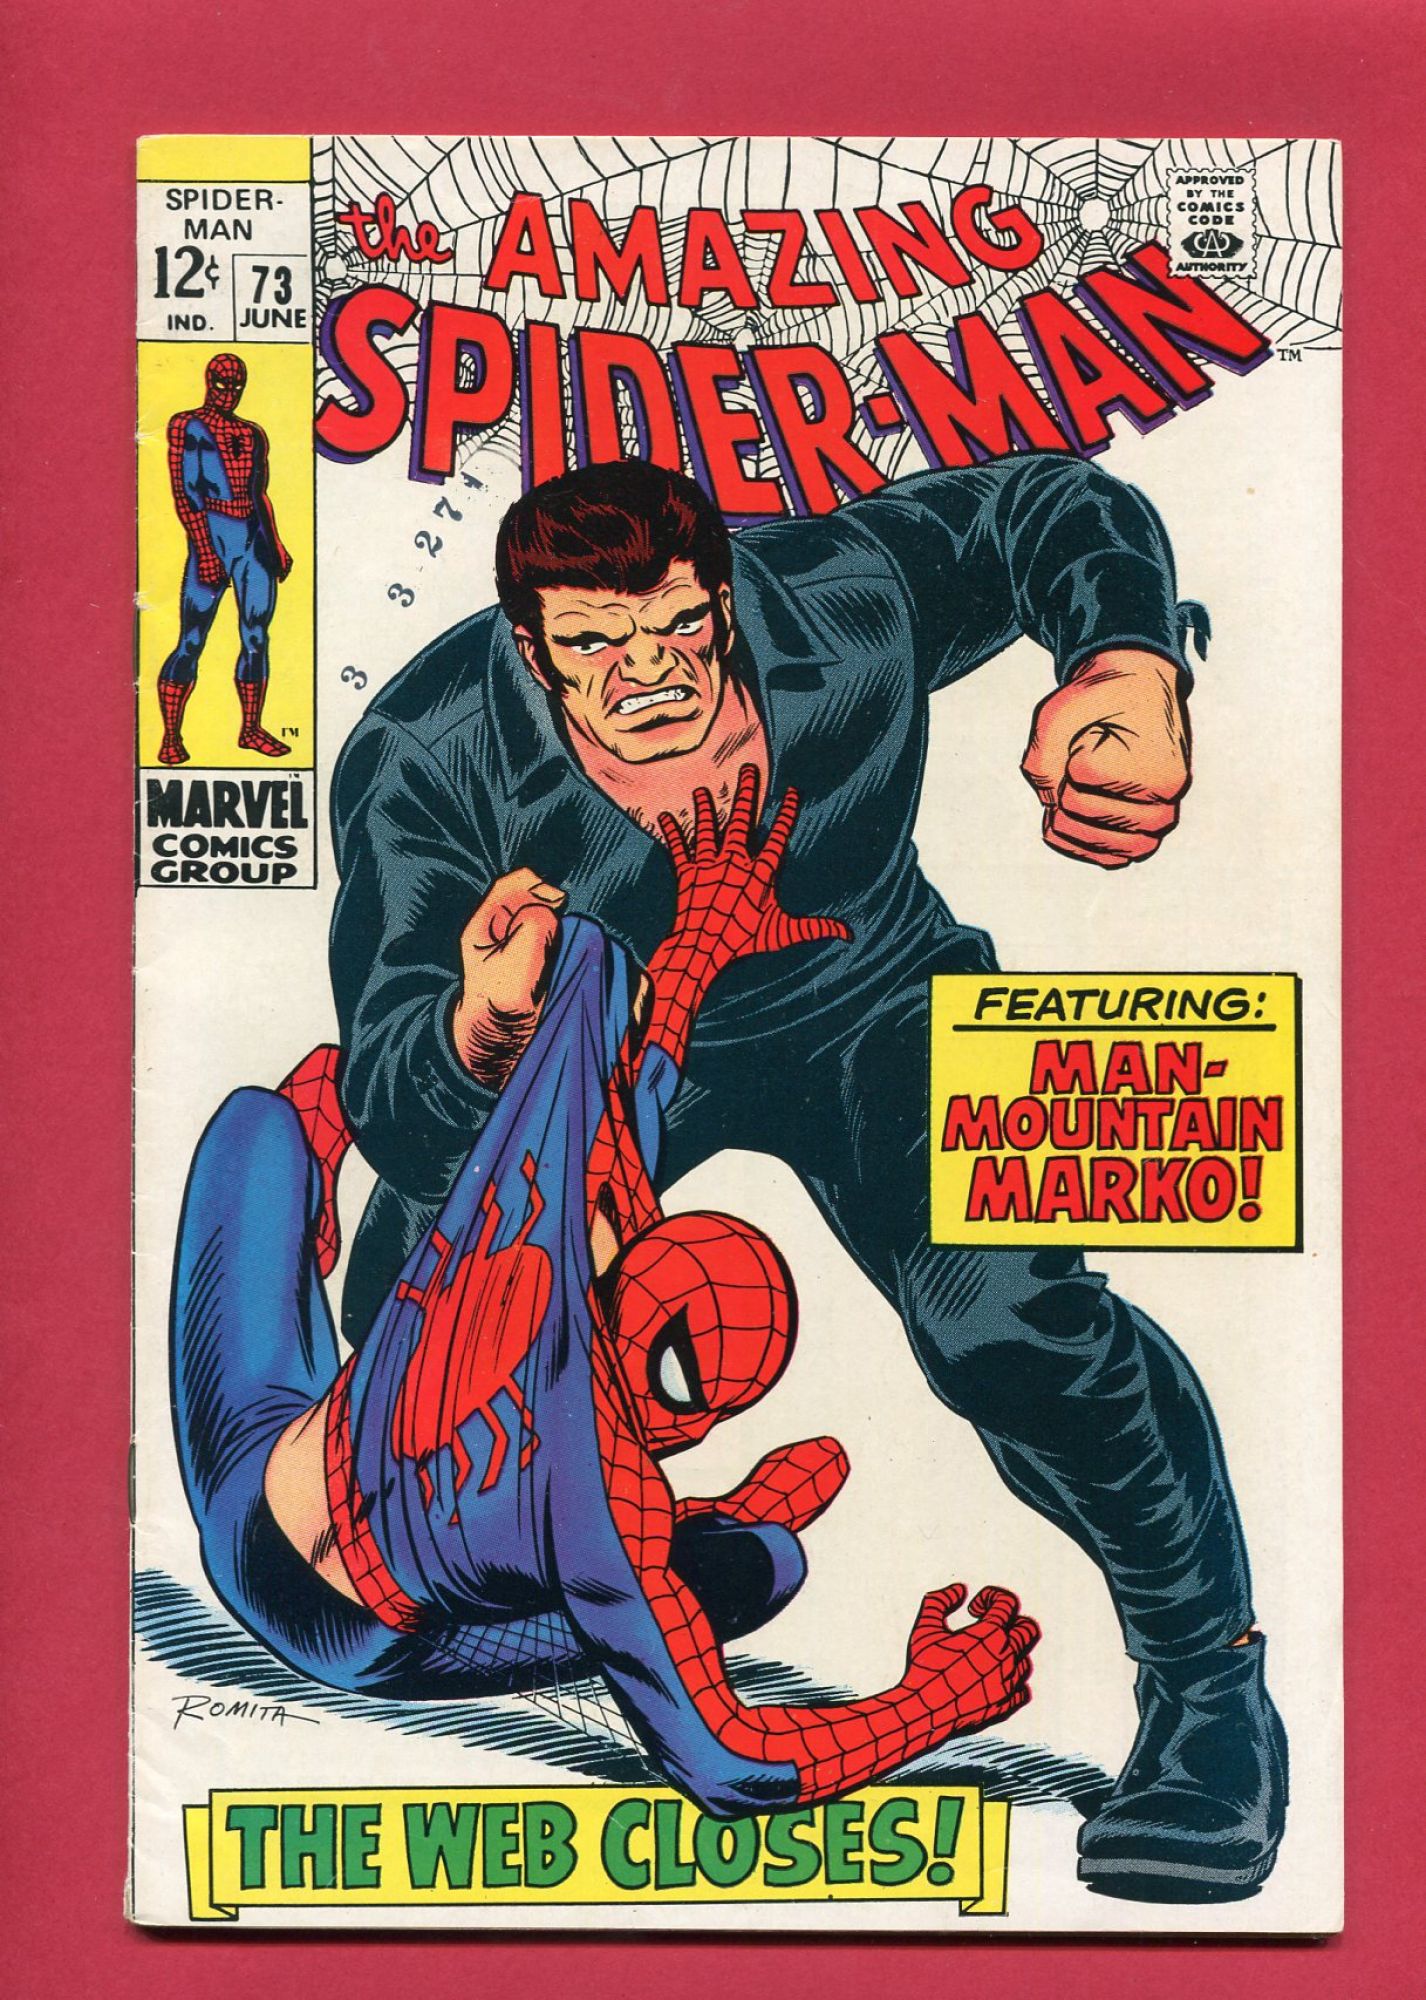 Amazing Spider-Man #73, Jun 1969, 6.0 FN